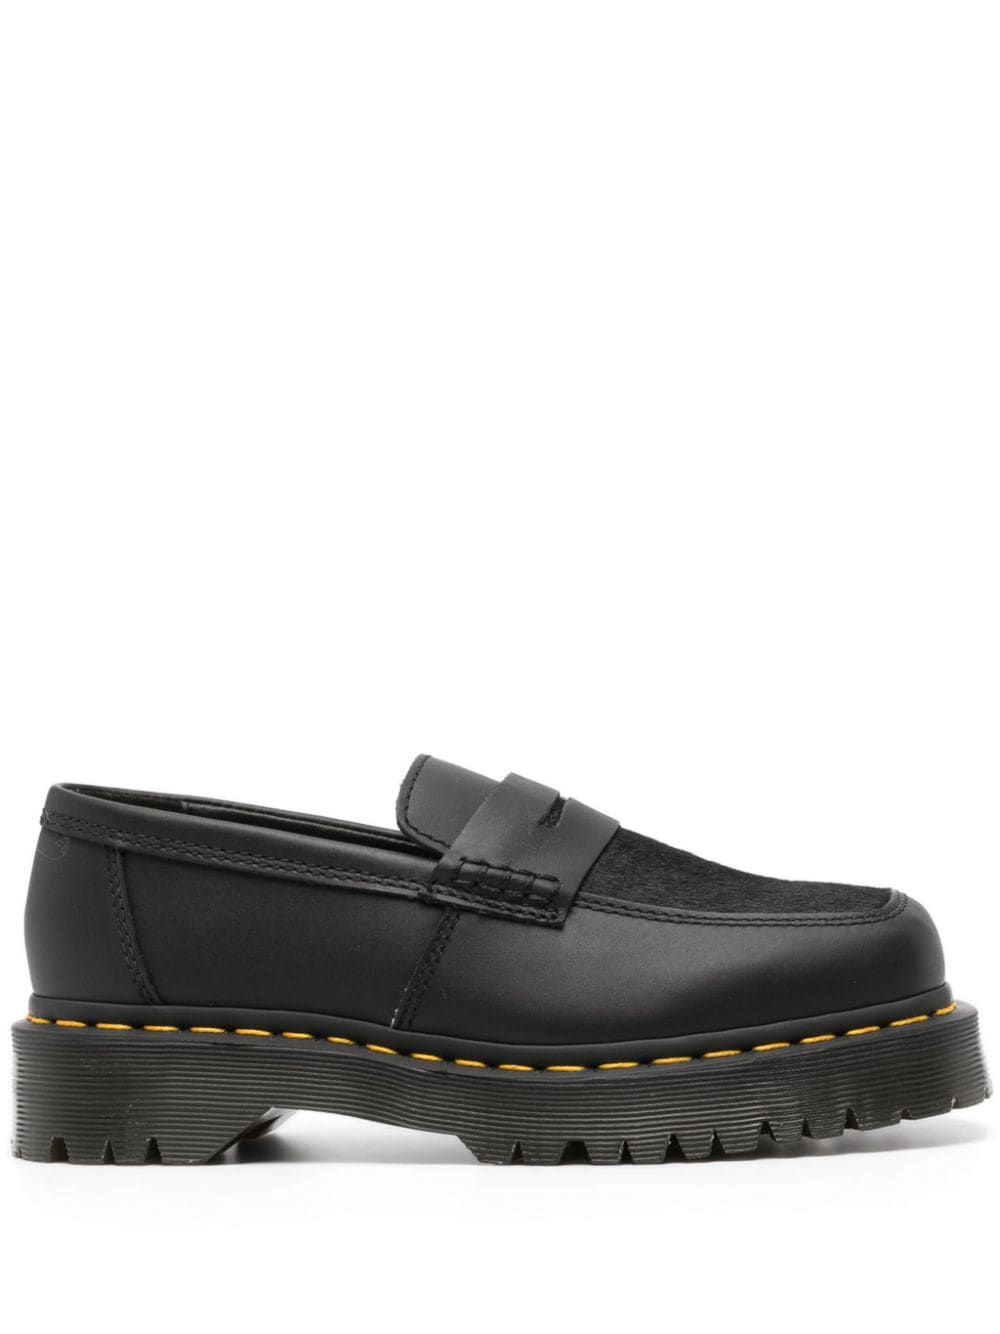 Dr. Martens Penton Bex Quilon slip-on leather loafers - Black von Dr. Martens